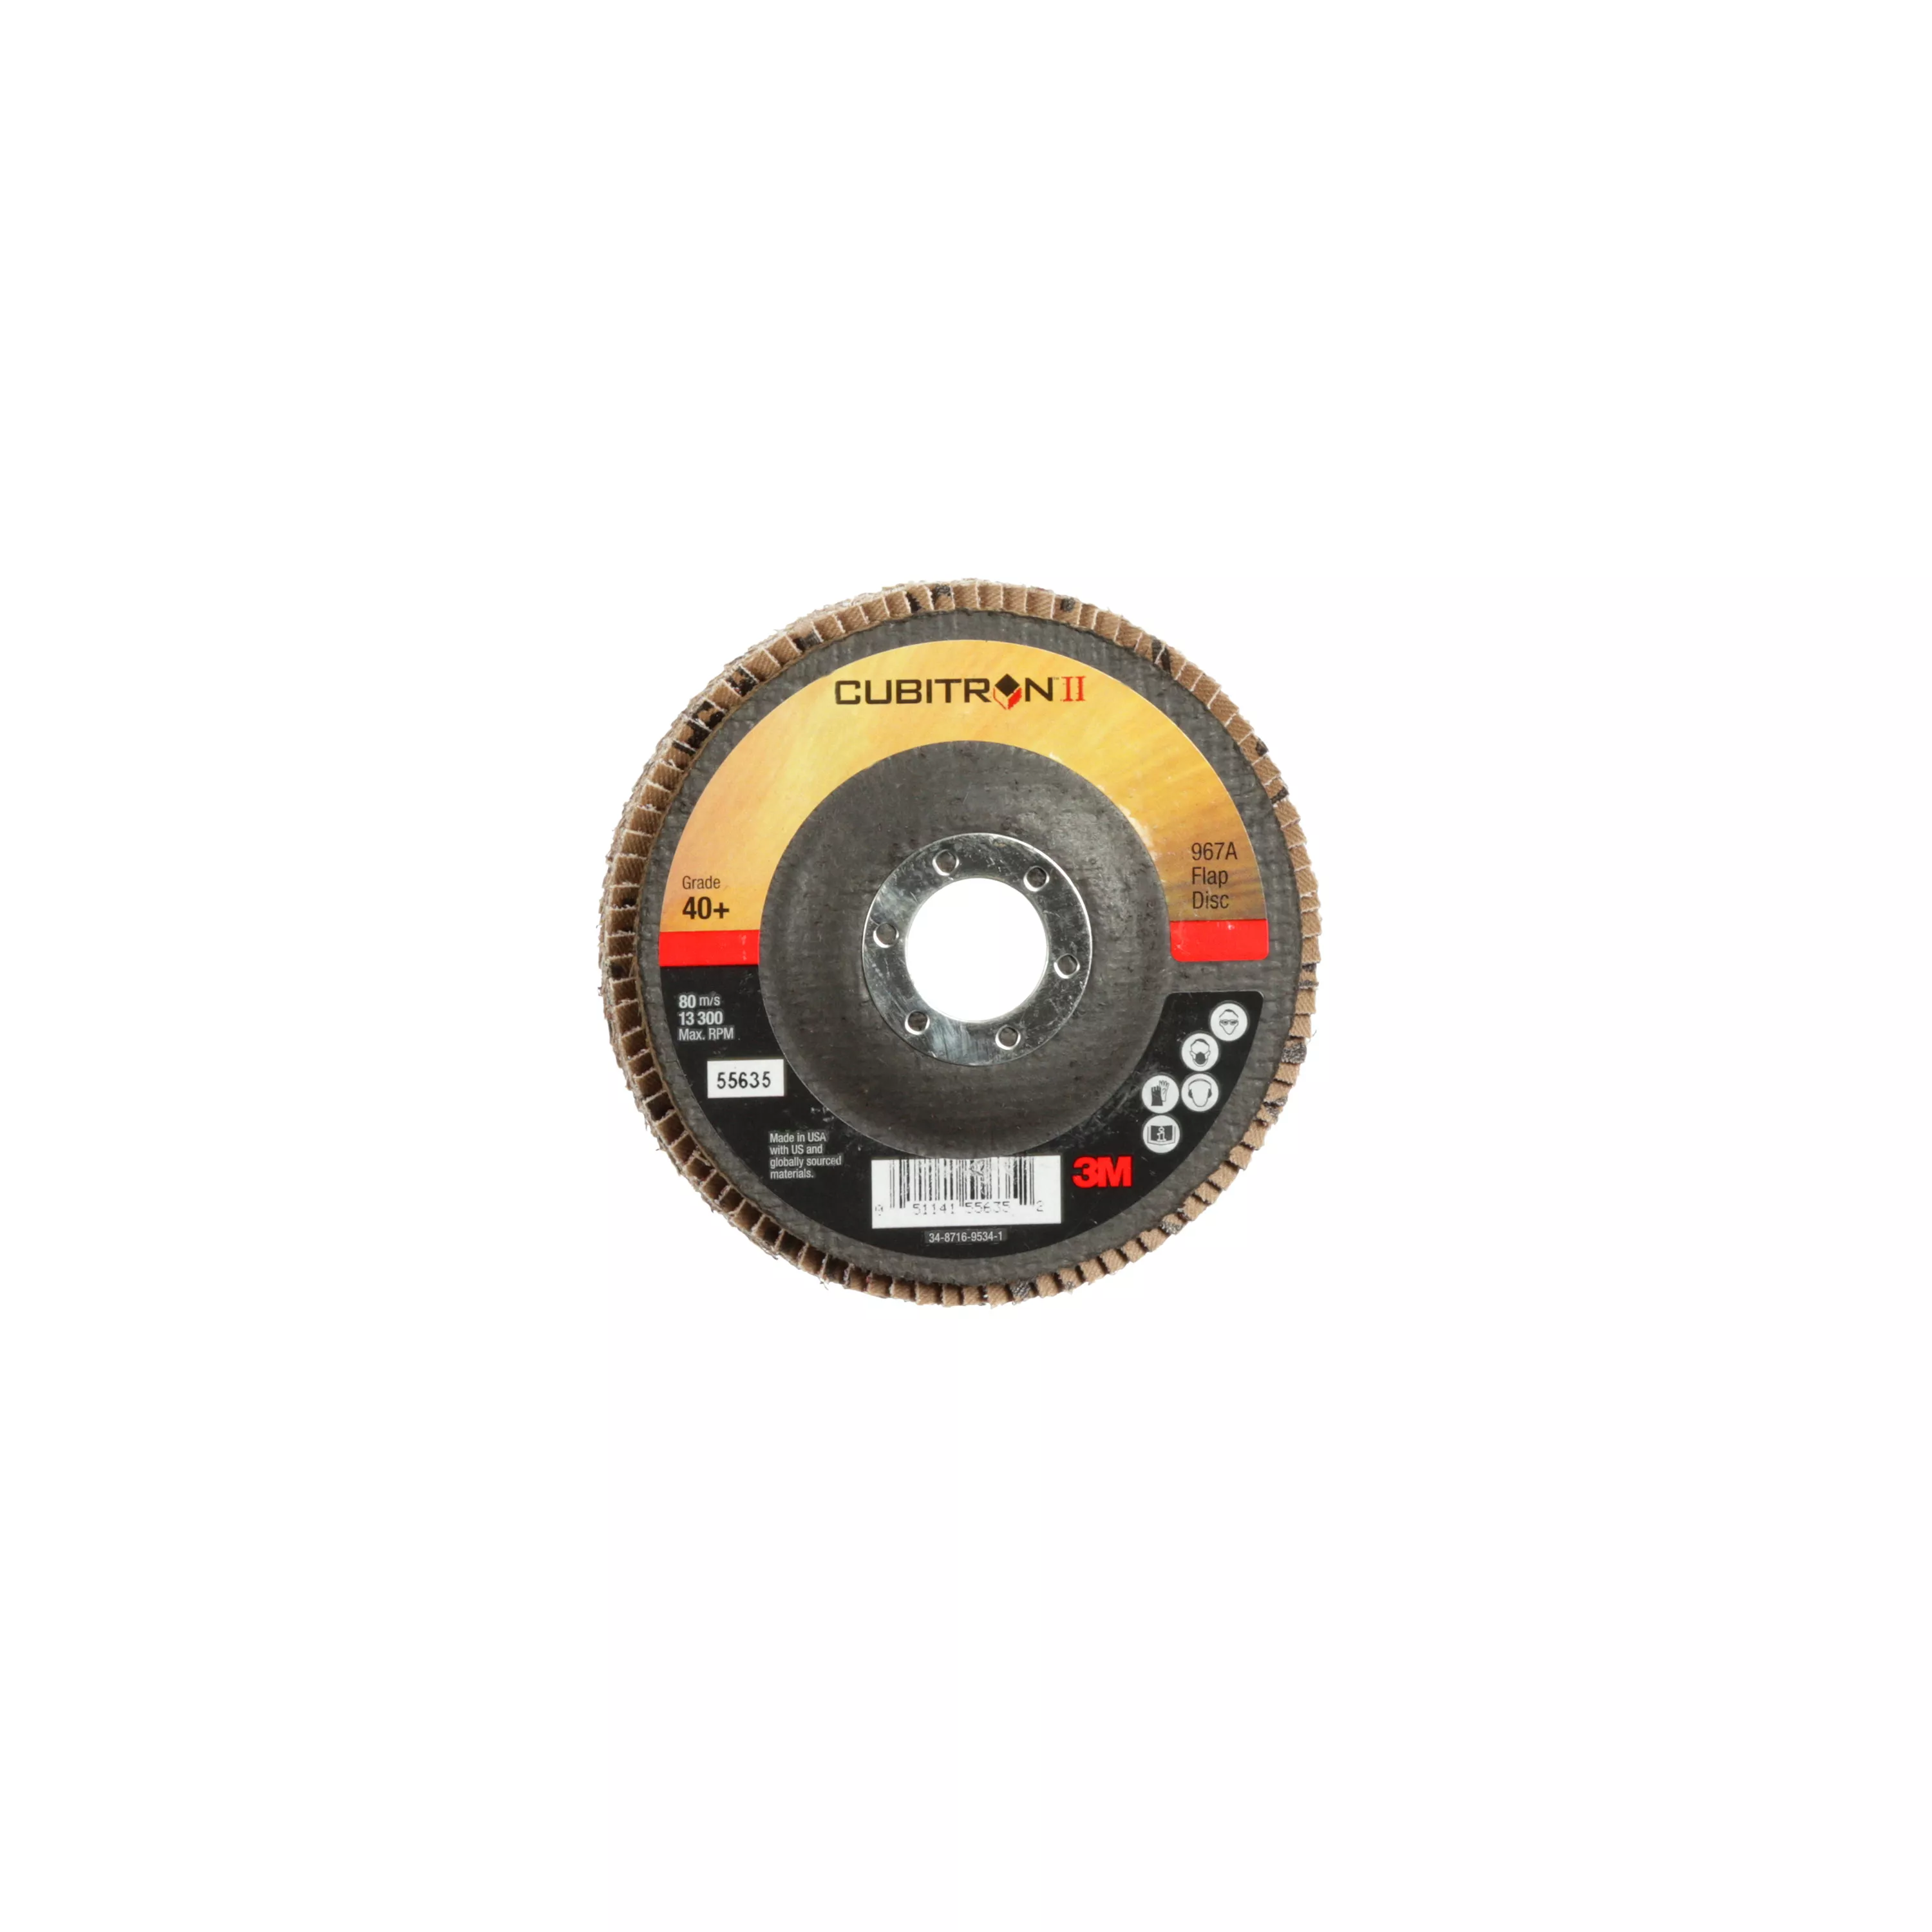 SKU 7100085781 | 3M™ Cubitron™ II Flap Disc 967A